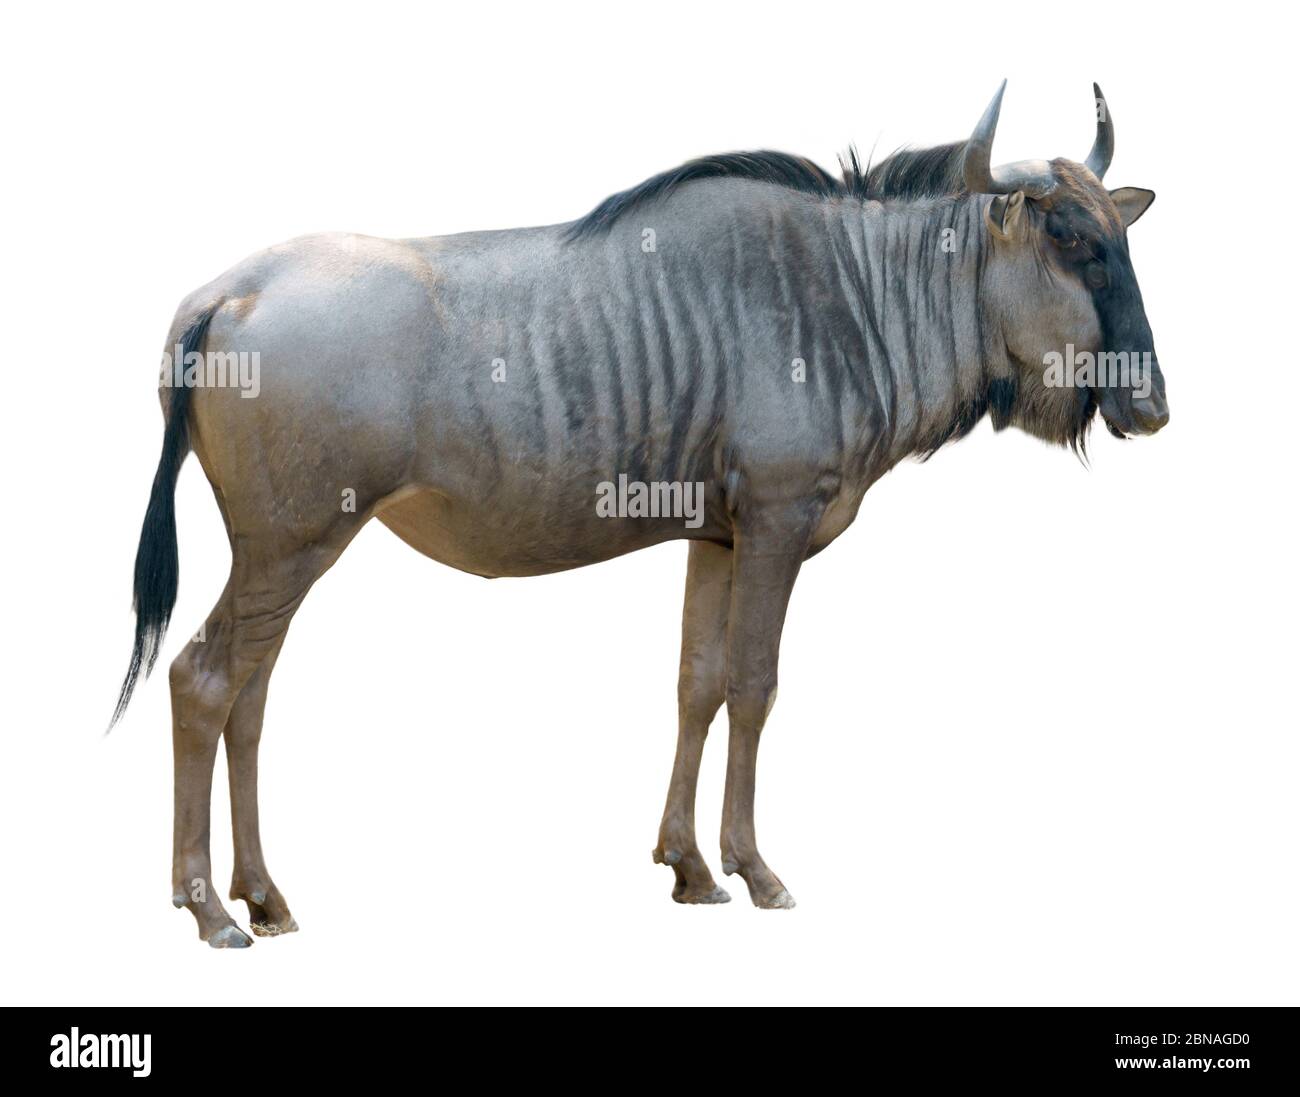 wildebeest or gnu isolated on white background Stock Photo